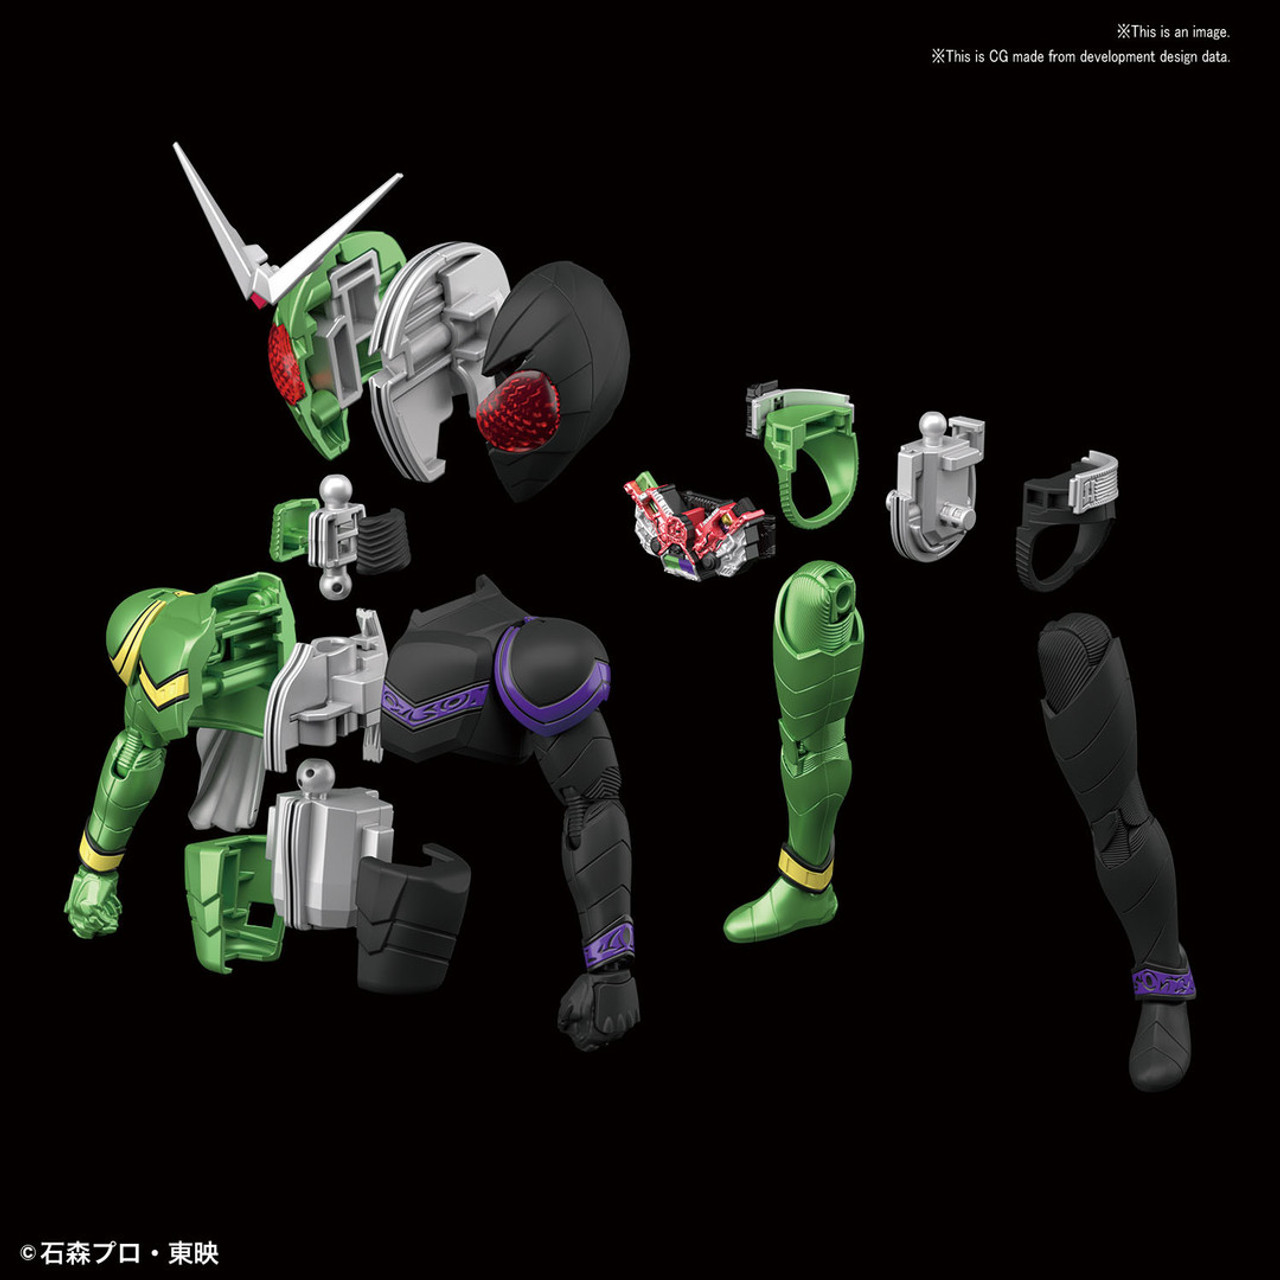 BAN2475037 Bandai Figure-Rise Standard Kamen Rider Double Cyclone Joker 'Kamen Rider'